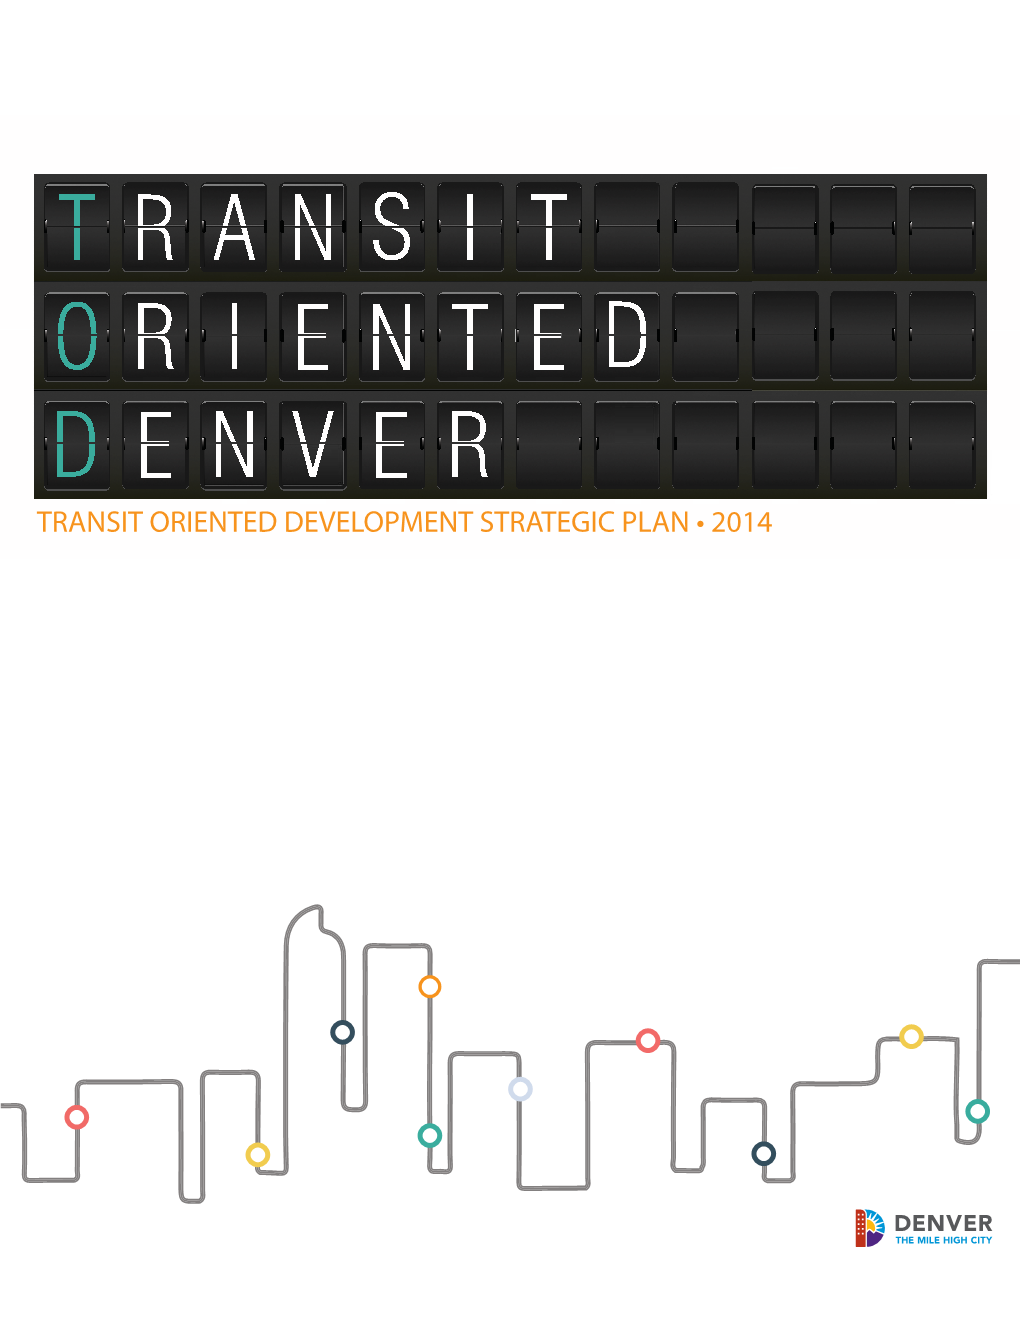 Transit Oriented Development (TOD) Strategic Plan